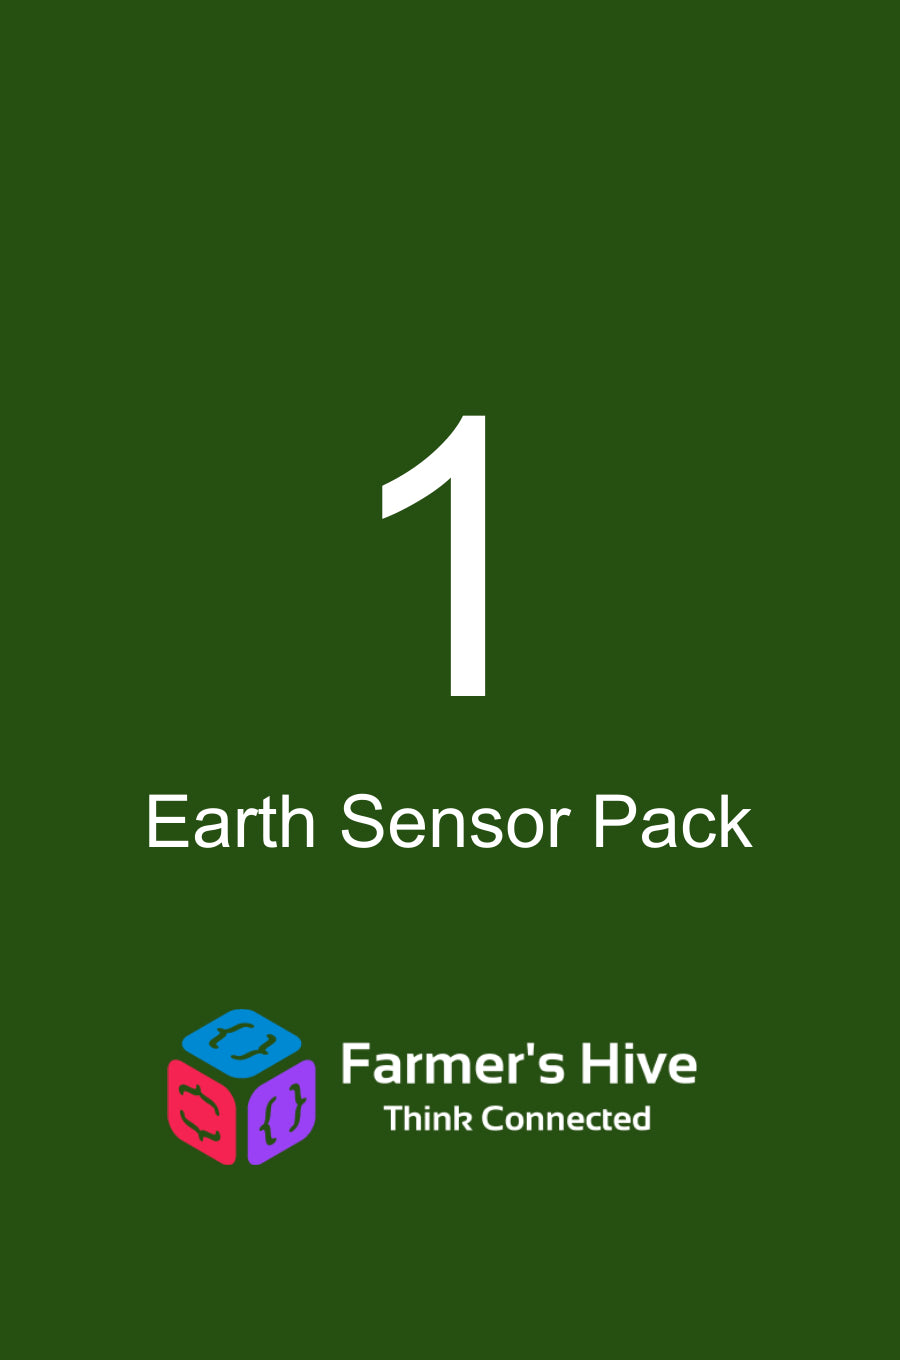 Farmer's Hive Earth Sensor (AGT150-M) (Sensor & Subscription Bundle)